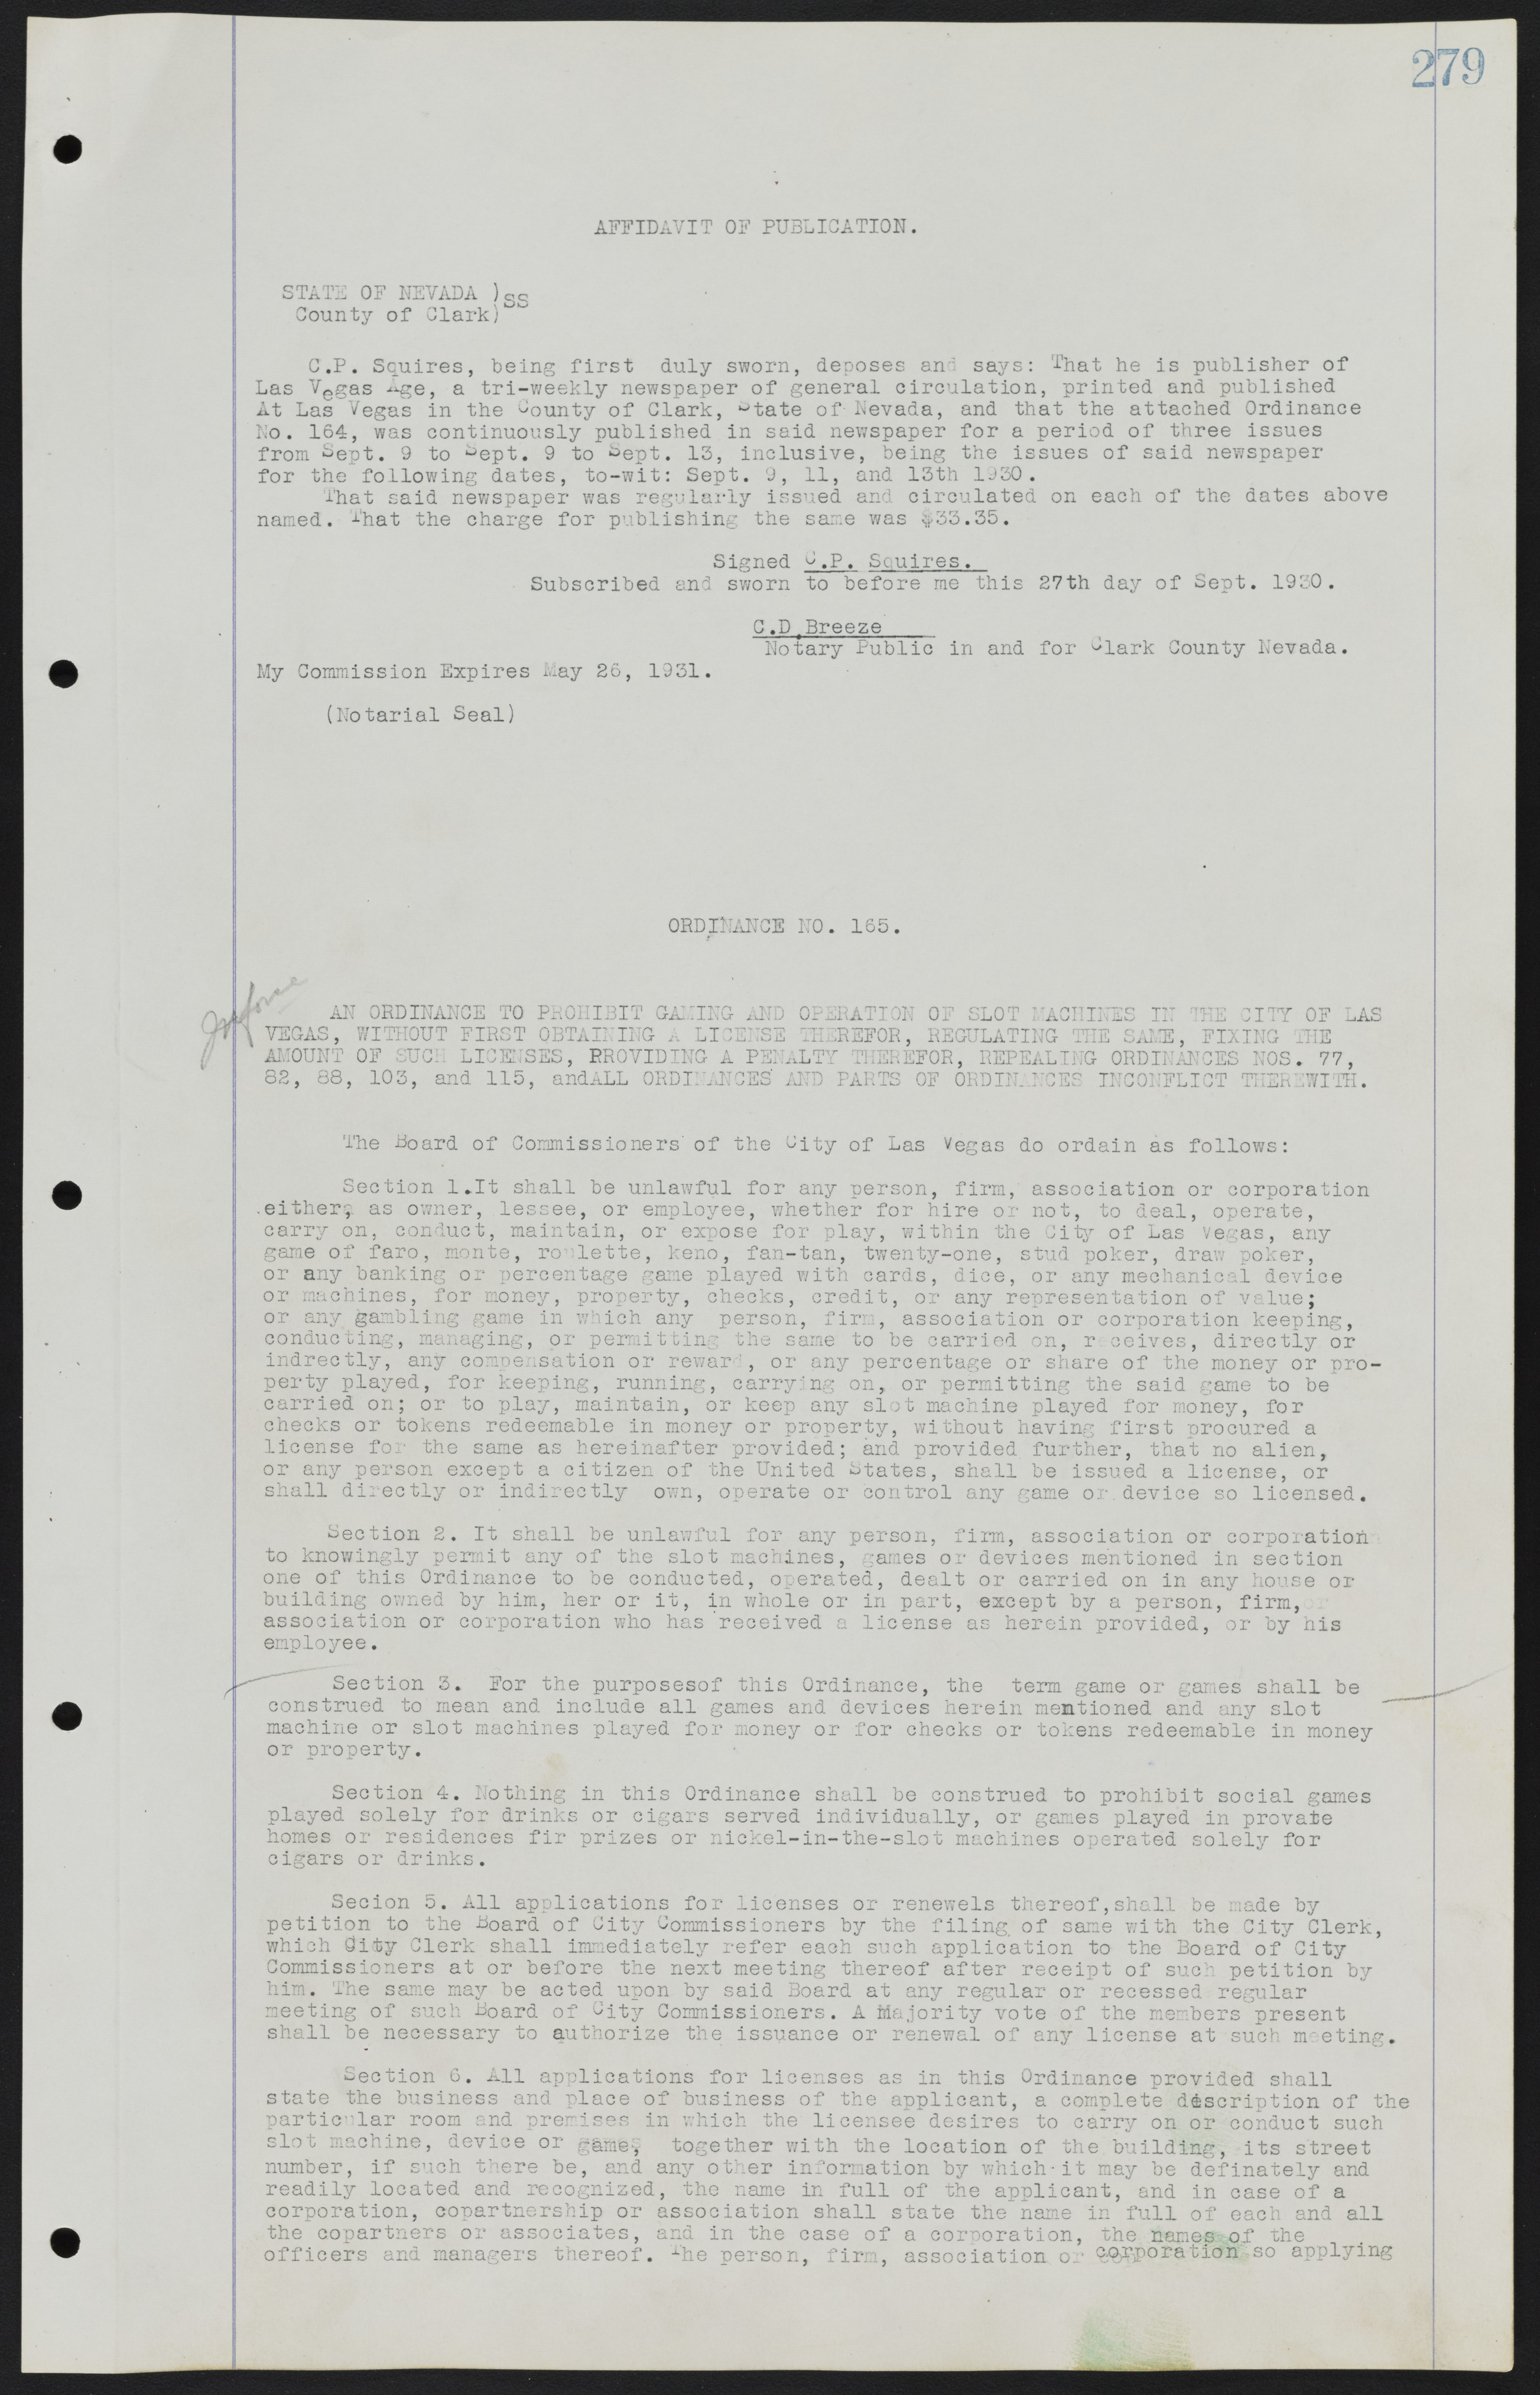 Las Vegas City Ordinances, July 18, 1911 to March 31, 1933, lvc000013-283